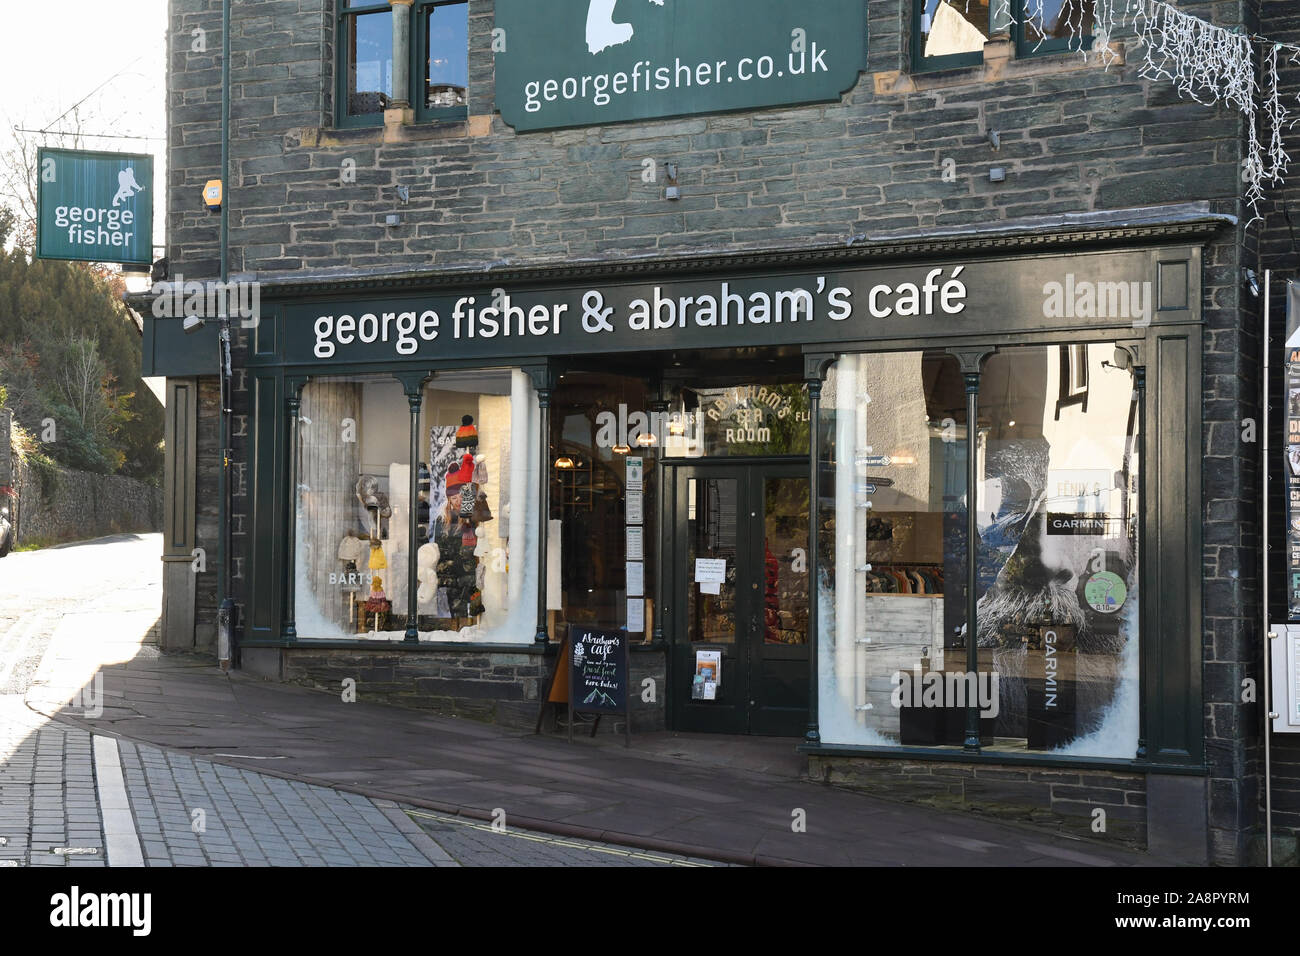 George Fisher outdoor shop and abrahams cafe, Keswick, Cumbria, England, UK Stock Photo